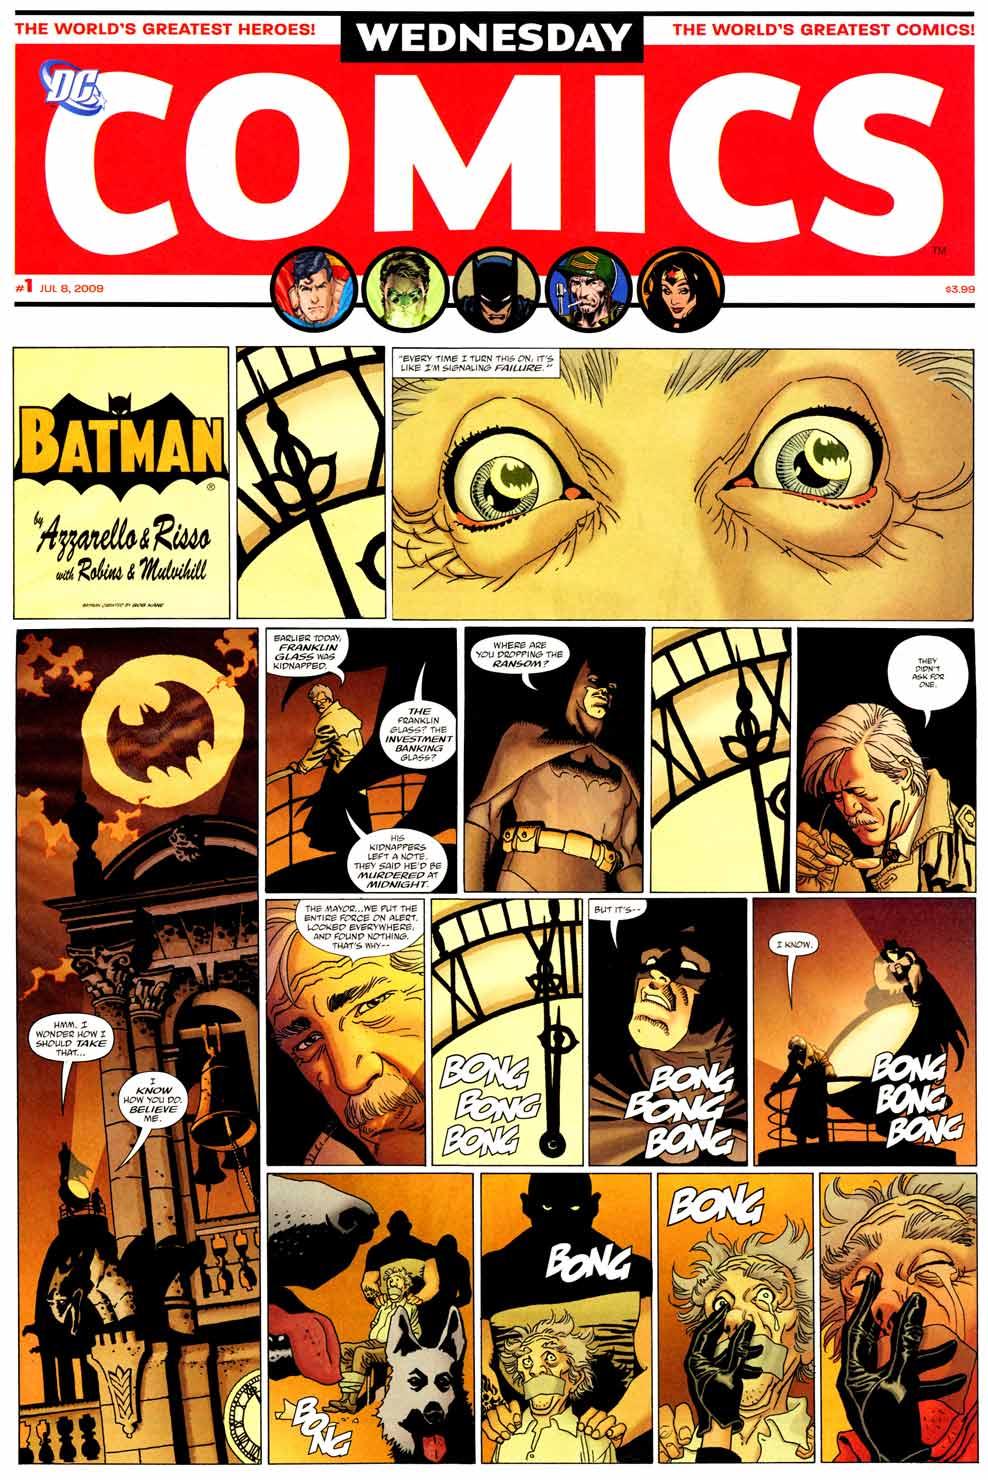 Wednesday-Comics-Page-01.jpg